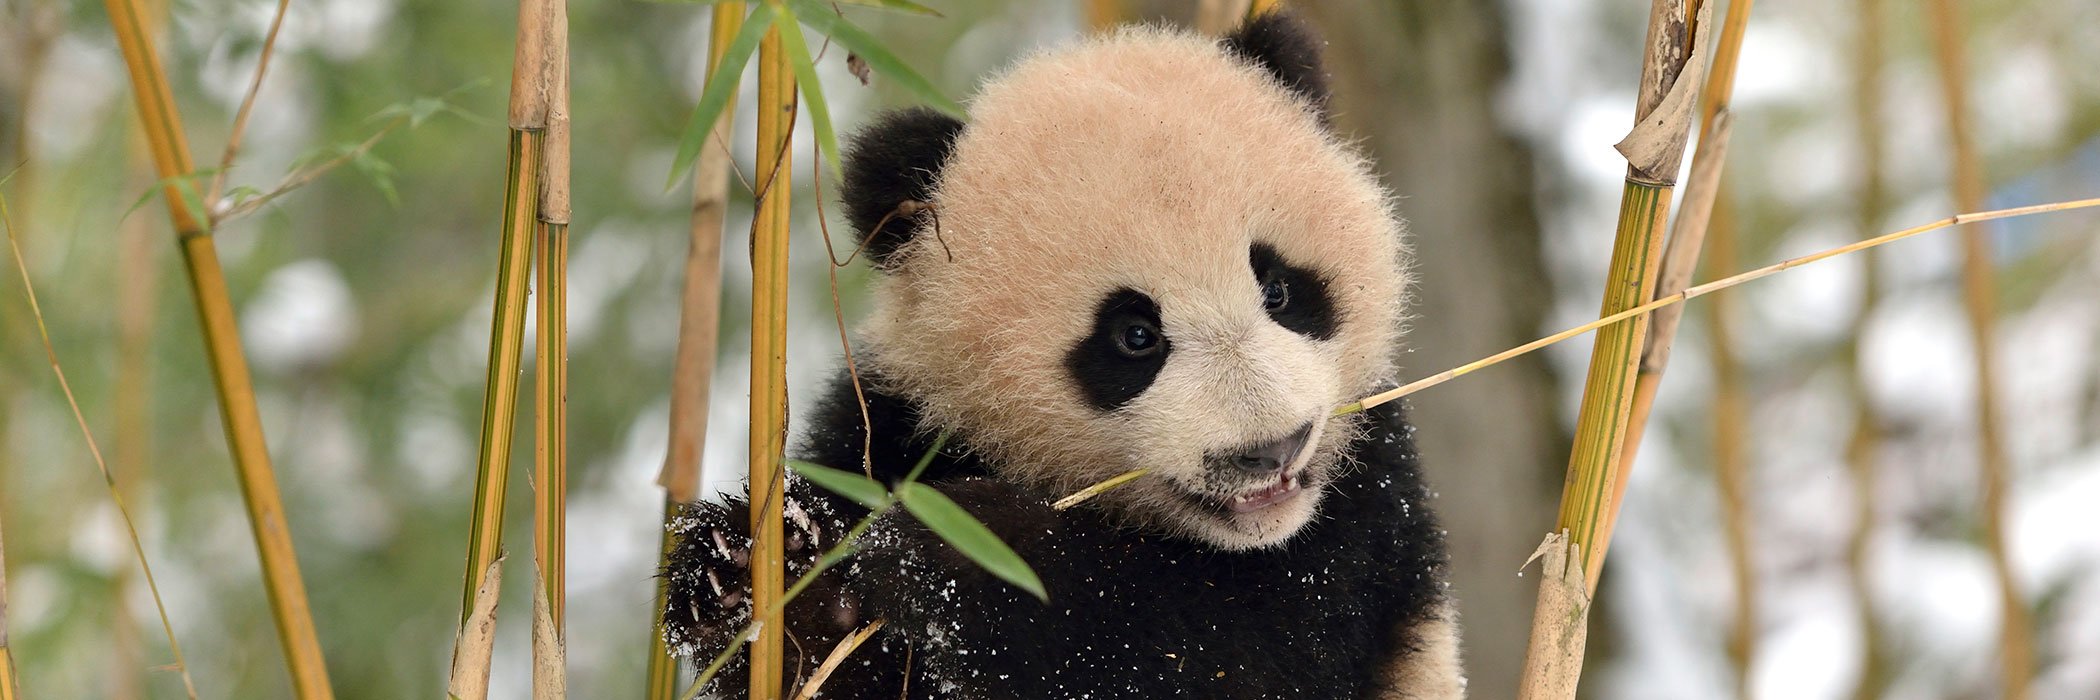 Giant panda cub in snow among bamboo.